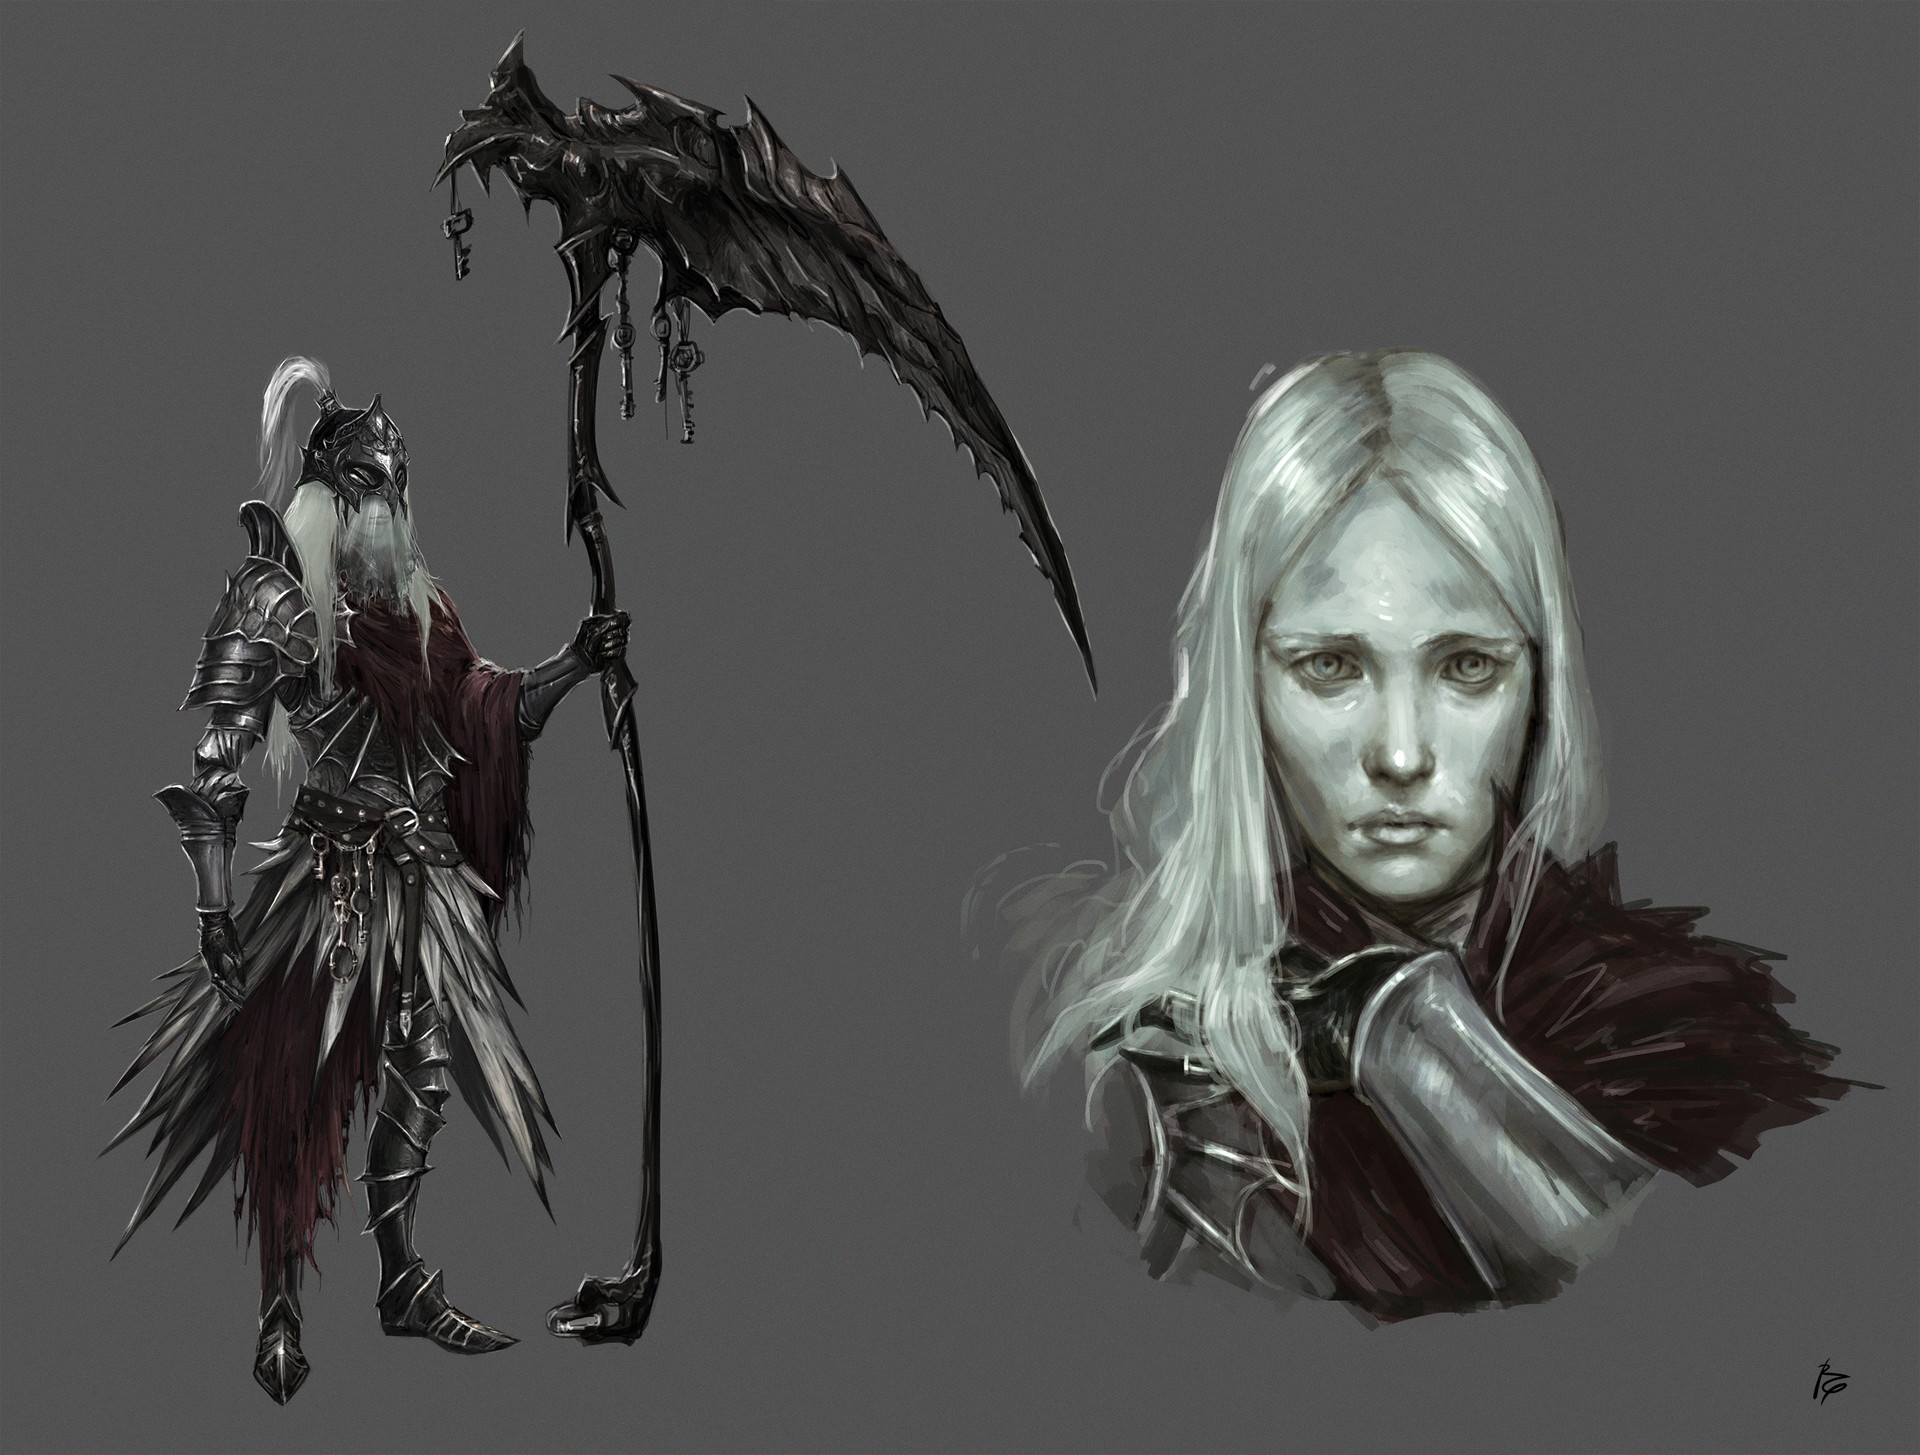 ArtStation - Concept arts for Dark souls 2